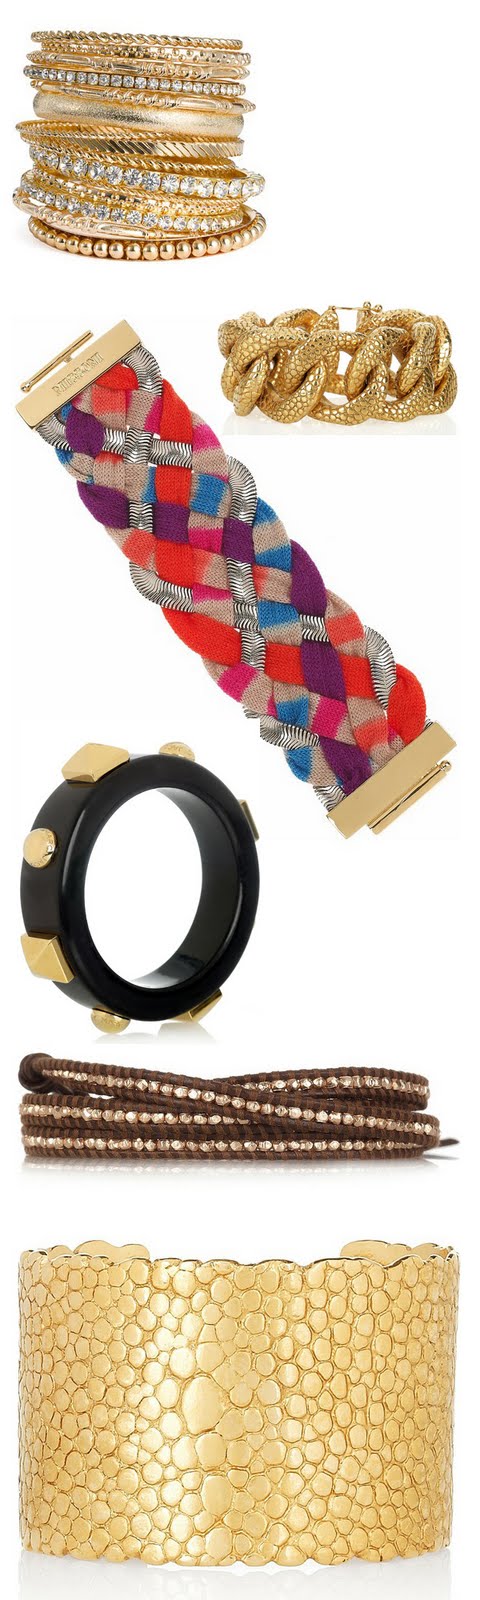 Style Umbrella: Fashion Inspiration: Arm Candy - Stacks of Bracelets